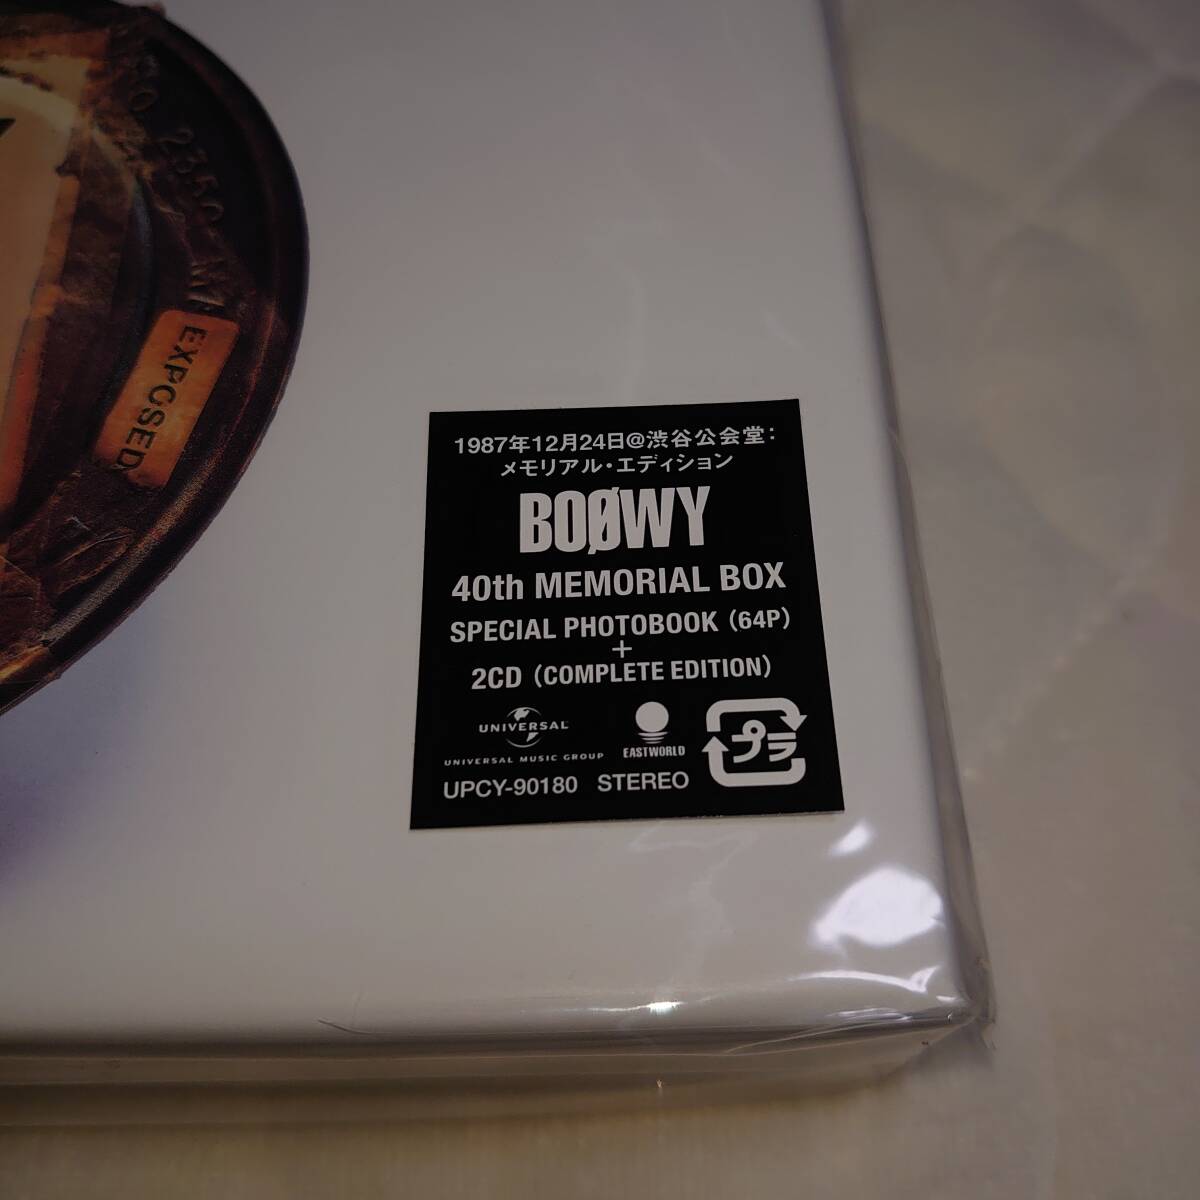 新品未開封品 2CD「BOOWY Memories of 1224」 40th MEMORIAL BOX SPECIAL PHOTOBOOK 特典付き 氷室京介 Q.E.D 35TH Blu-ray_画像2